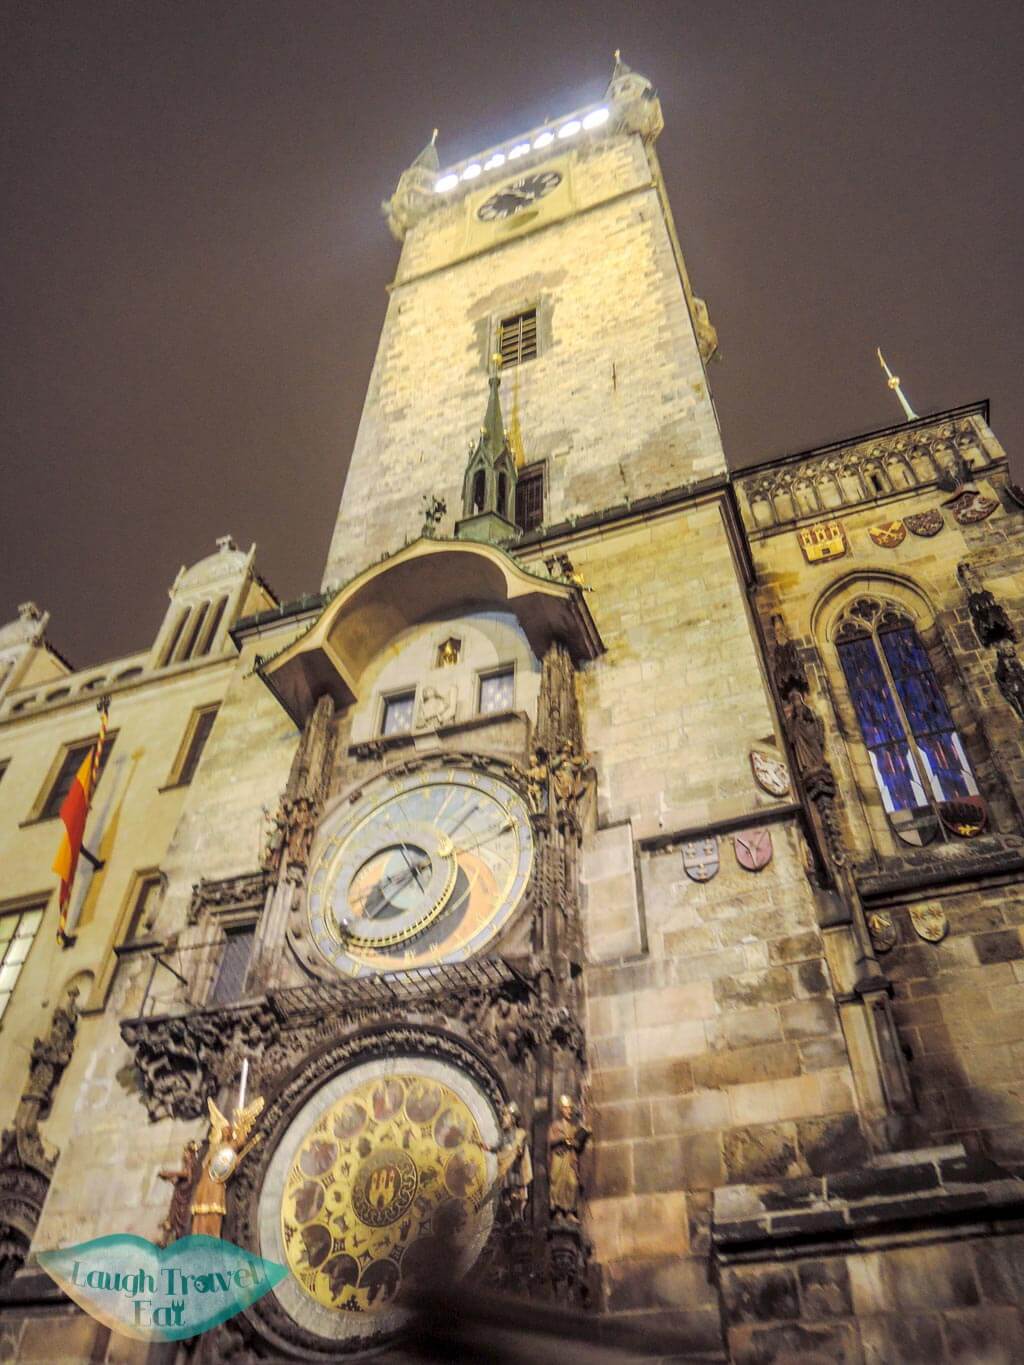 Astrological clock Prague, Czech Repulic - Laugh Travel Eat